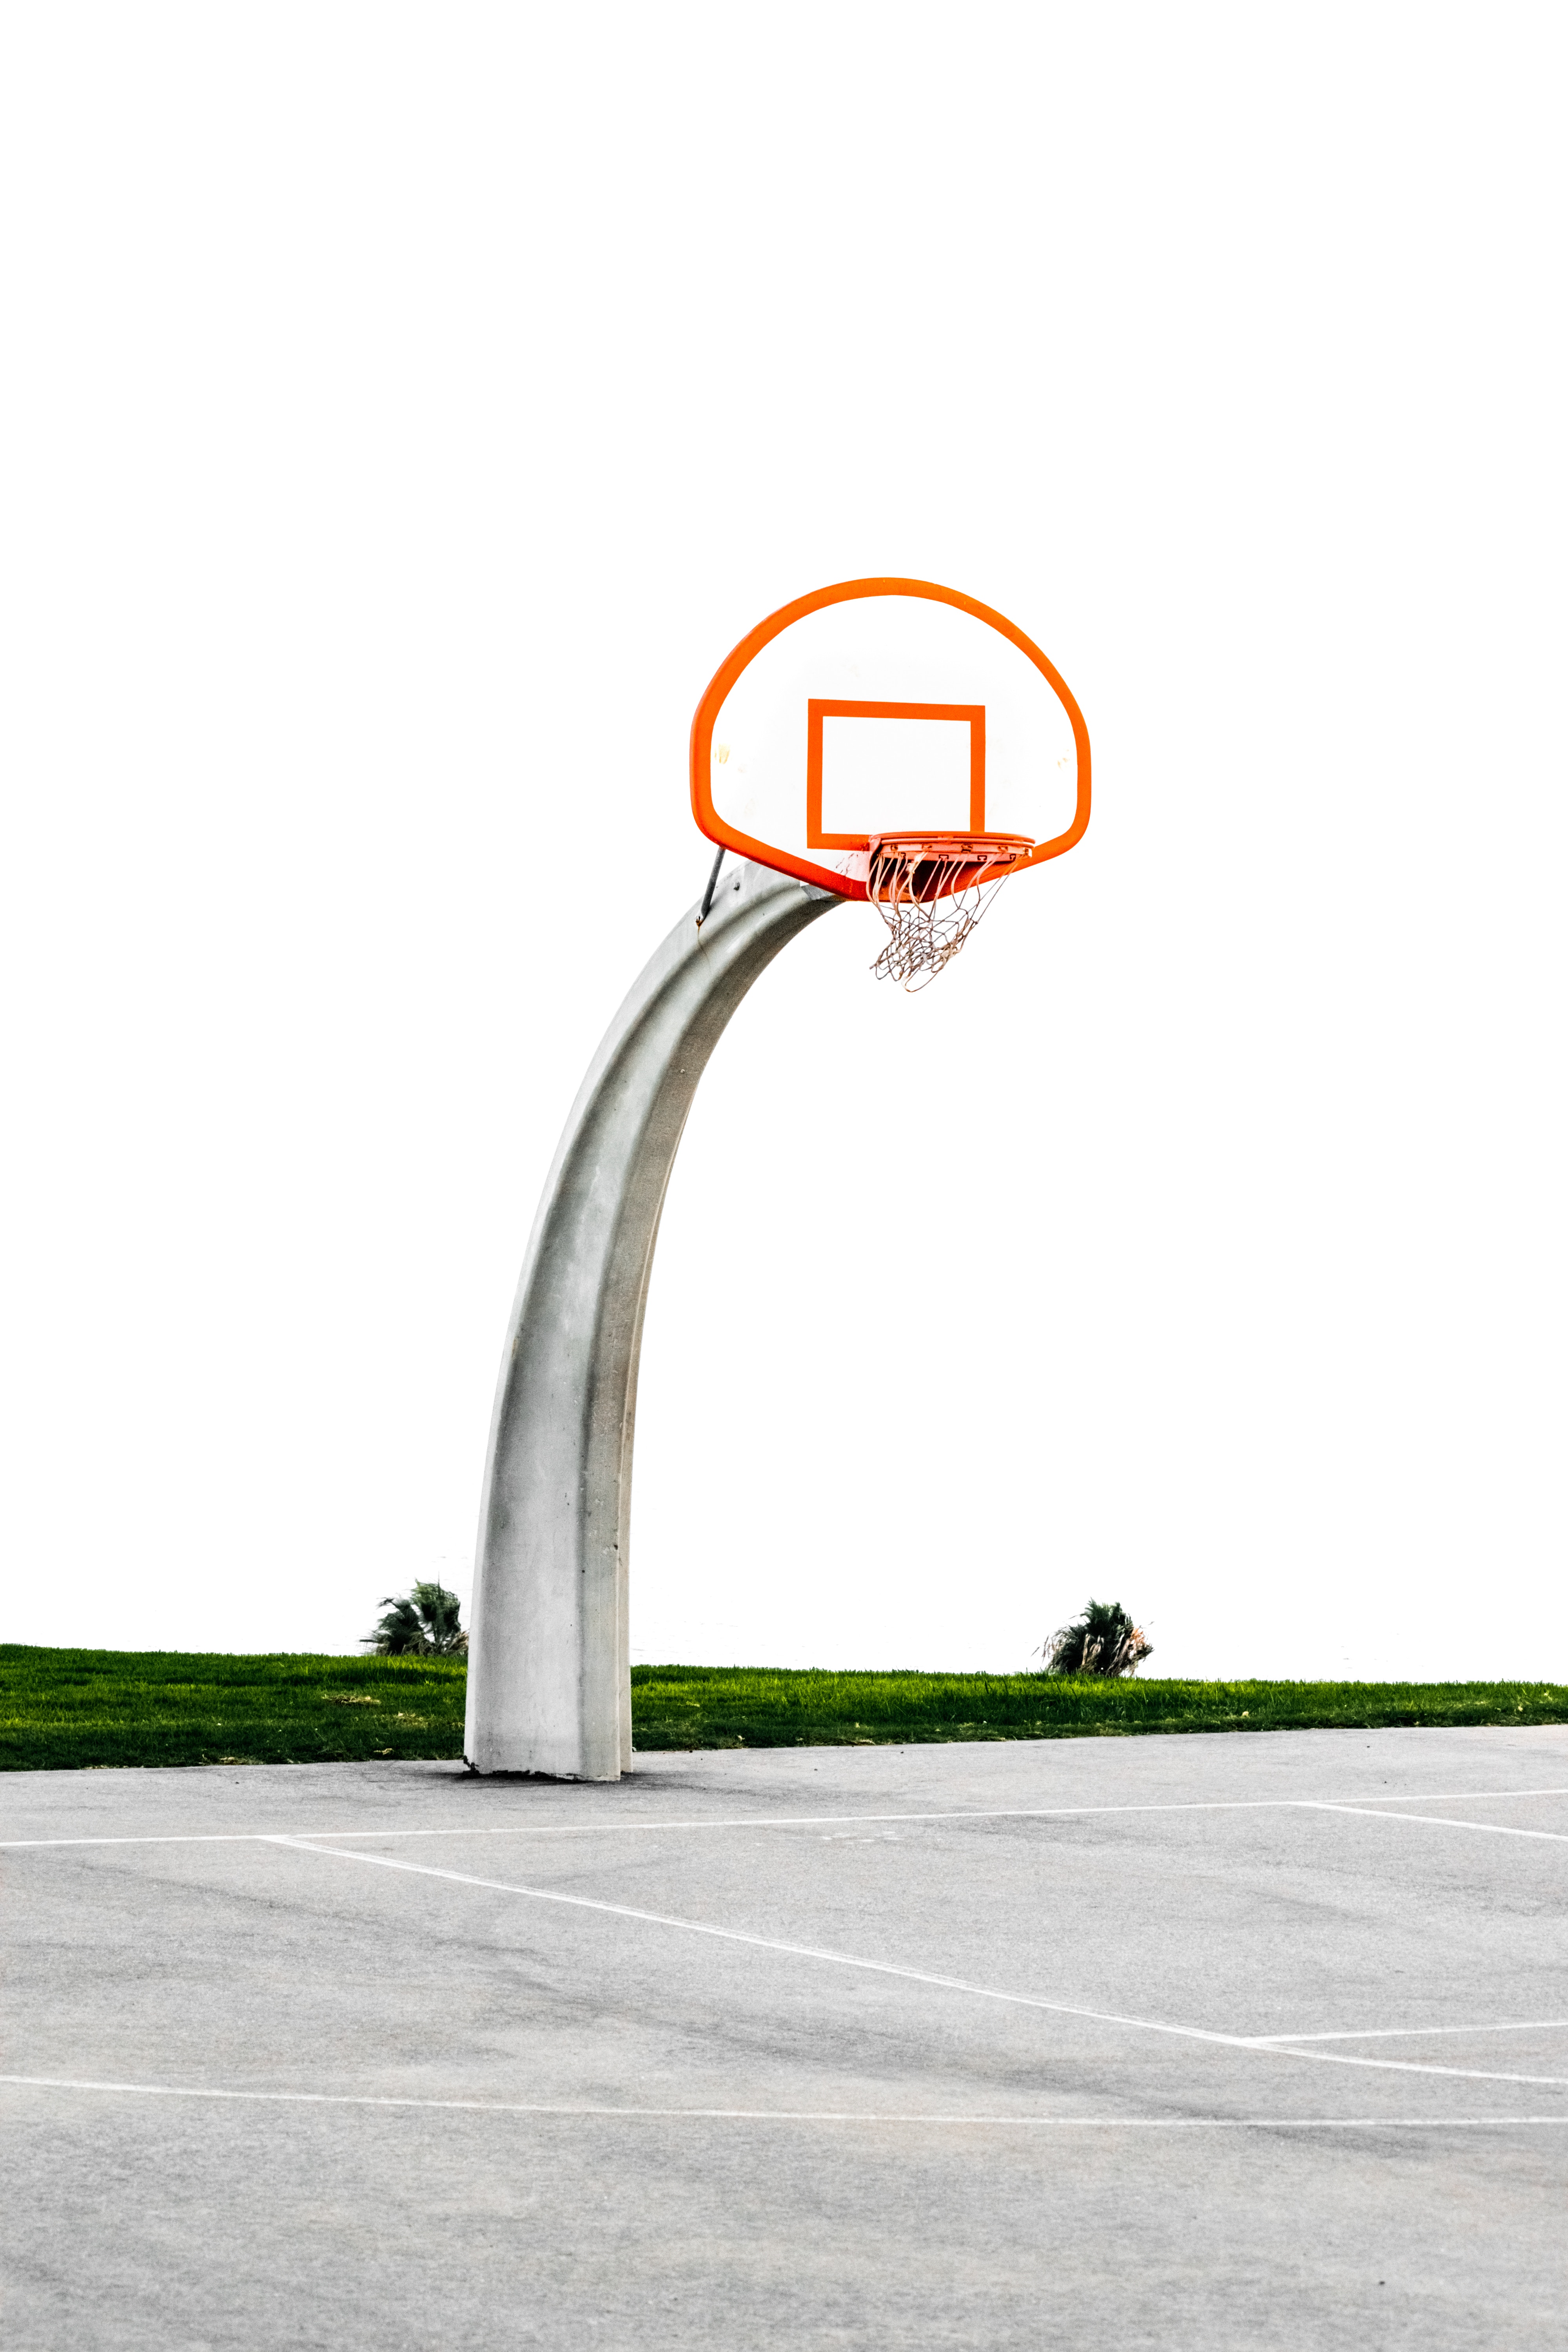 111735 descargar imagen deportes, baloncesto, patio de recreo, plataforma, pilar, exponer, aro de baloncesto, anillo de baloncesto: fondos de pantalla y protectores de pantalla gratis